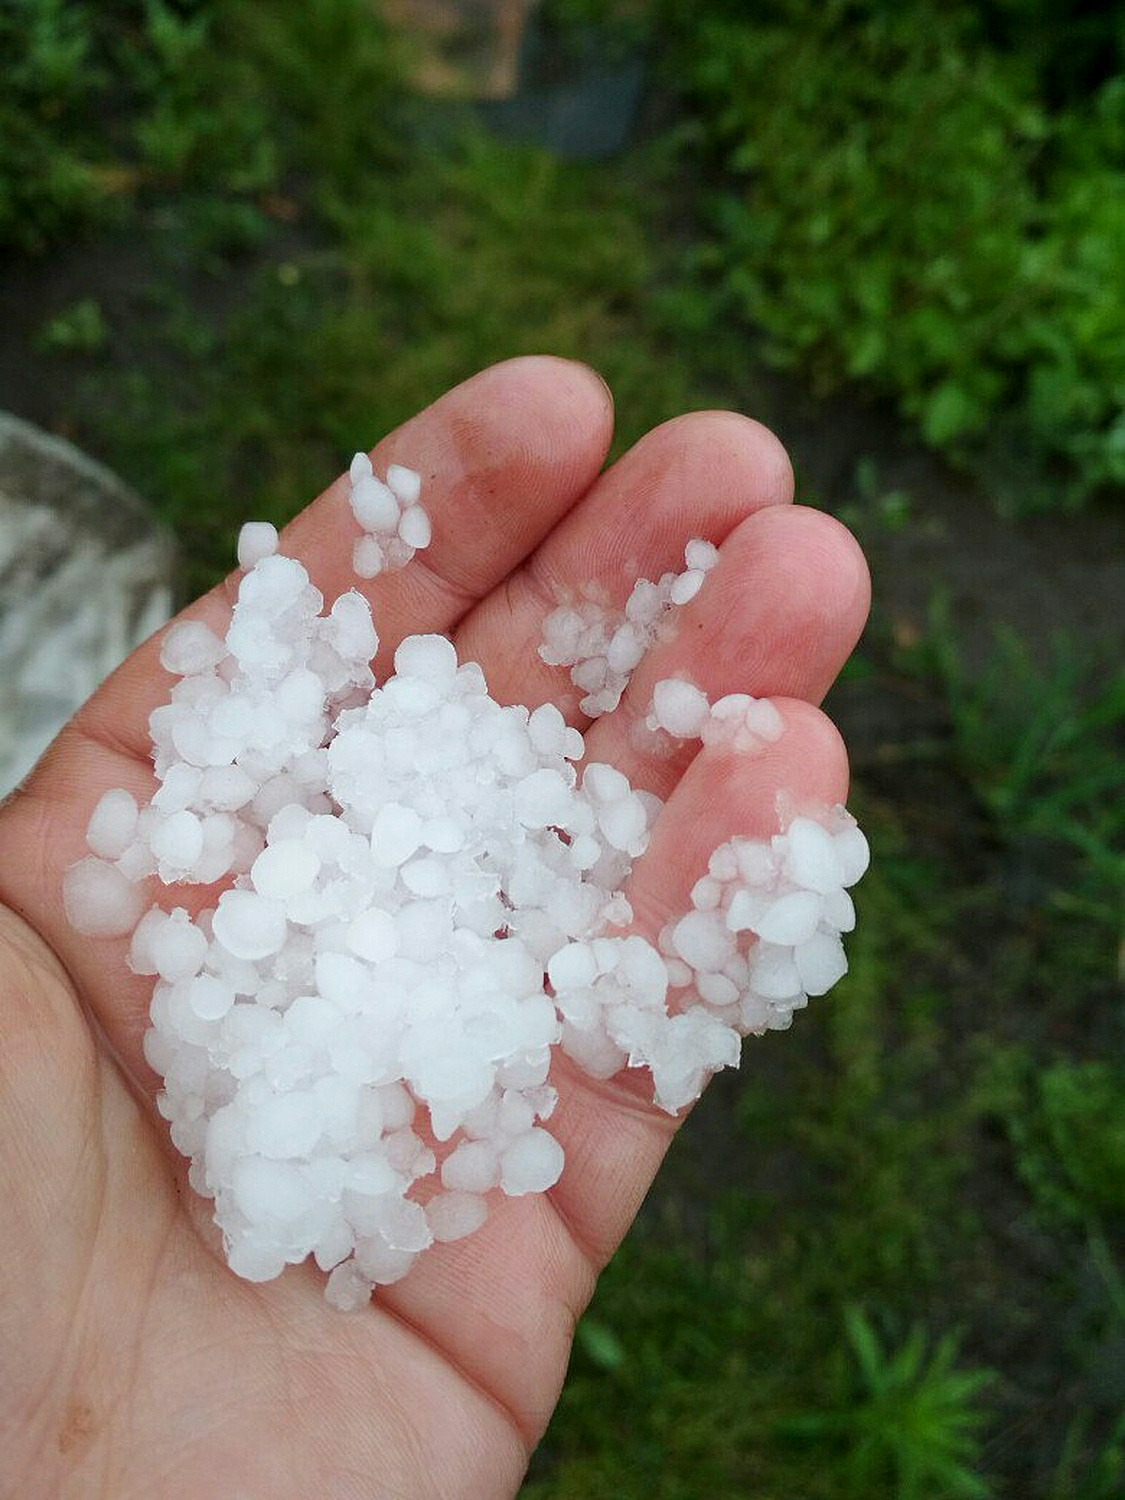 A heavy hailstorm and snowfall near Kazan, Tatarstan. Source: Global Look Press